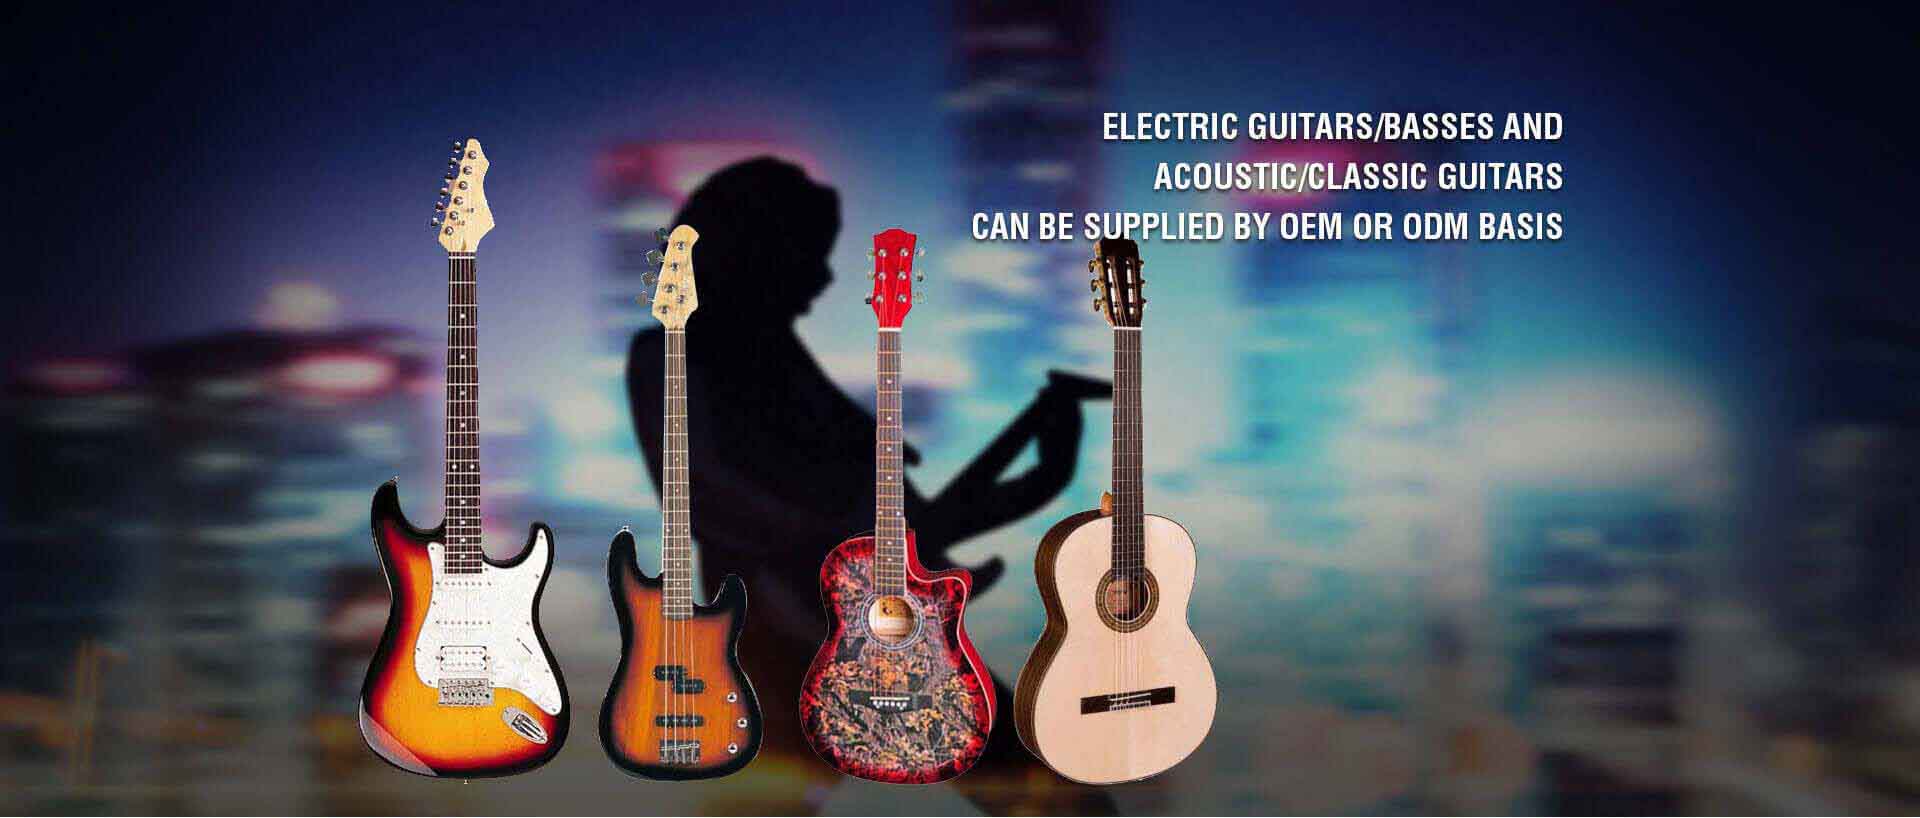 Electric Guitar, Electric Bass, Acoustic Guitar, Classic Guitar